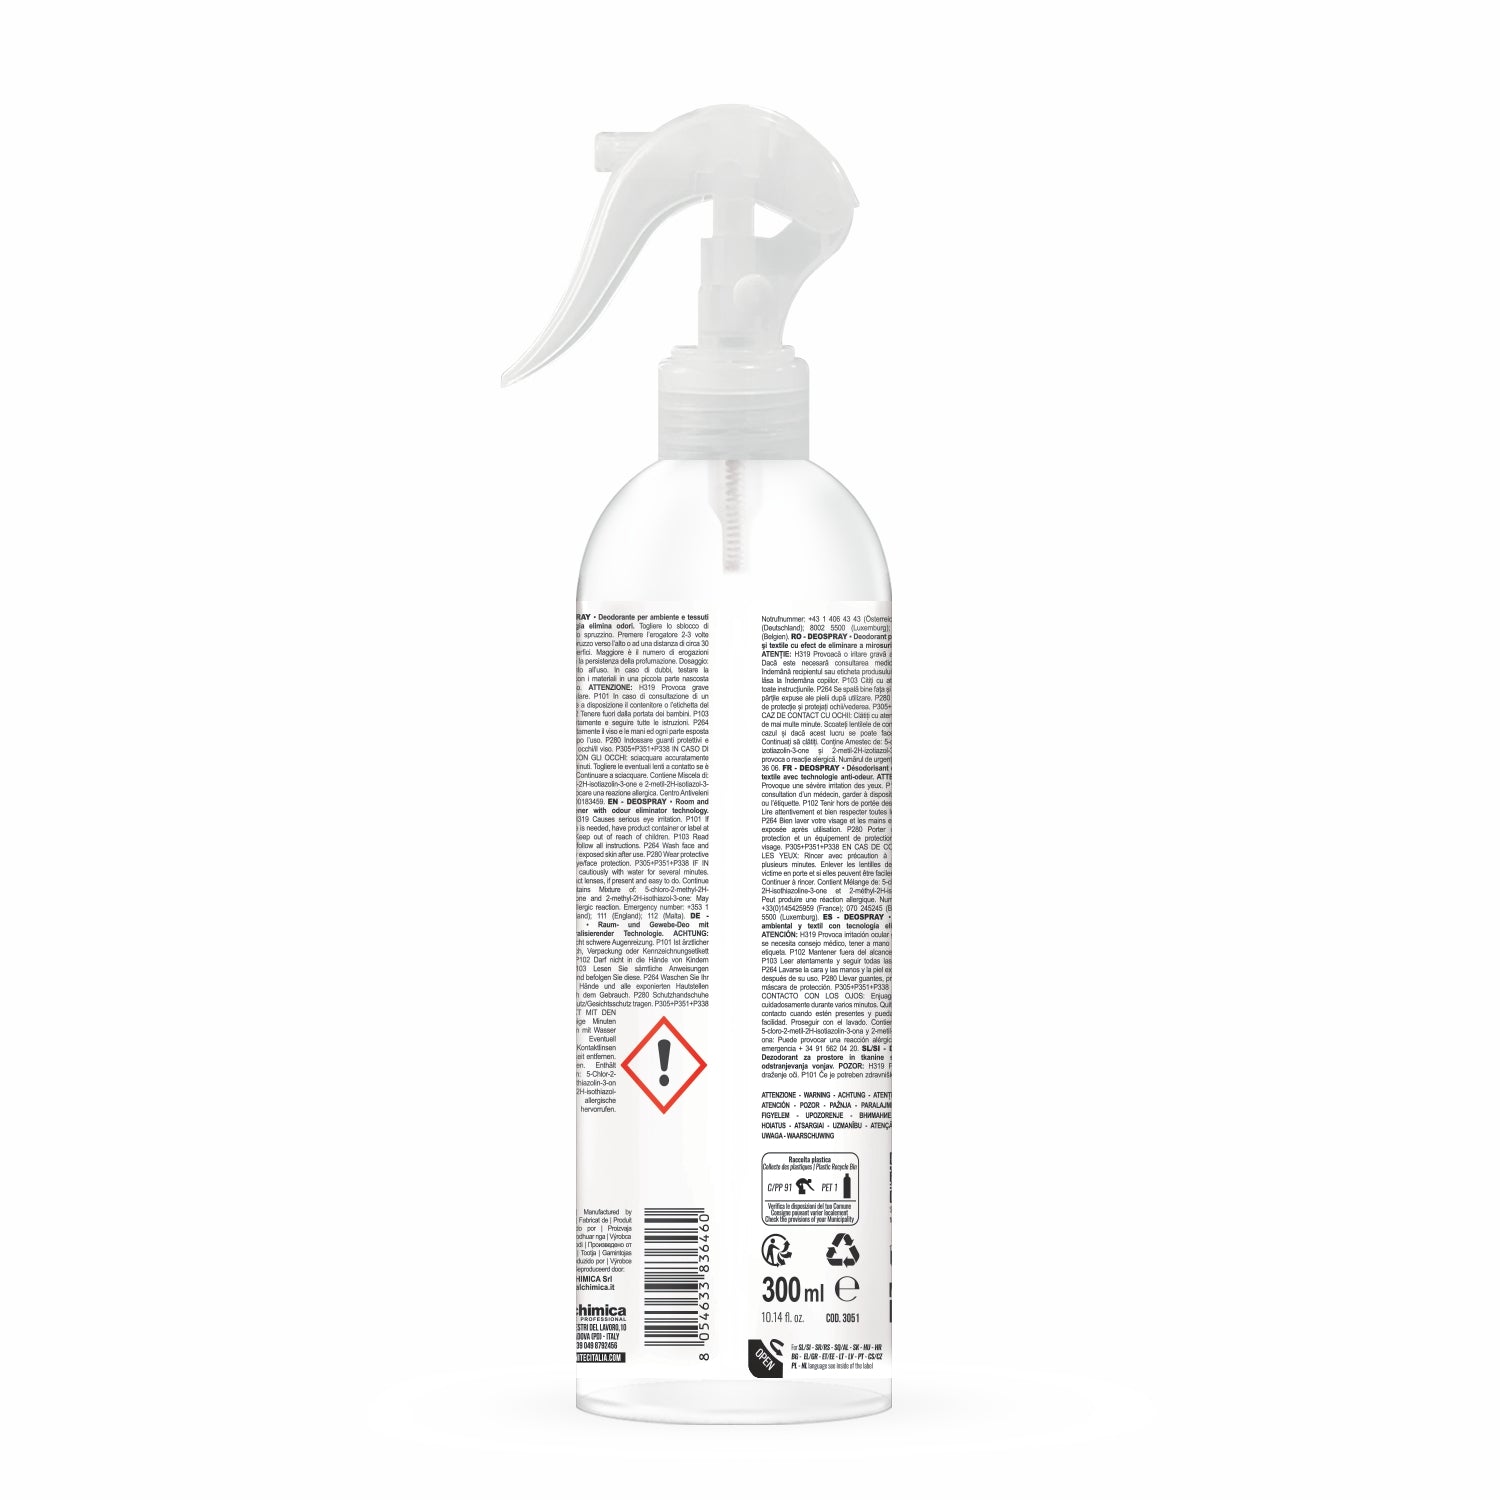 Deodorante per ambienti e tessuti con tecnologia elimina odori deo spray philosophy 300 ml sanitec 3051